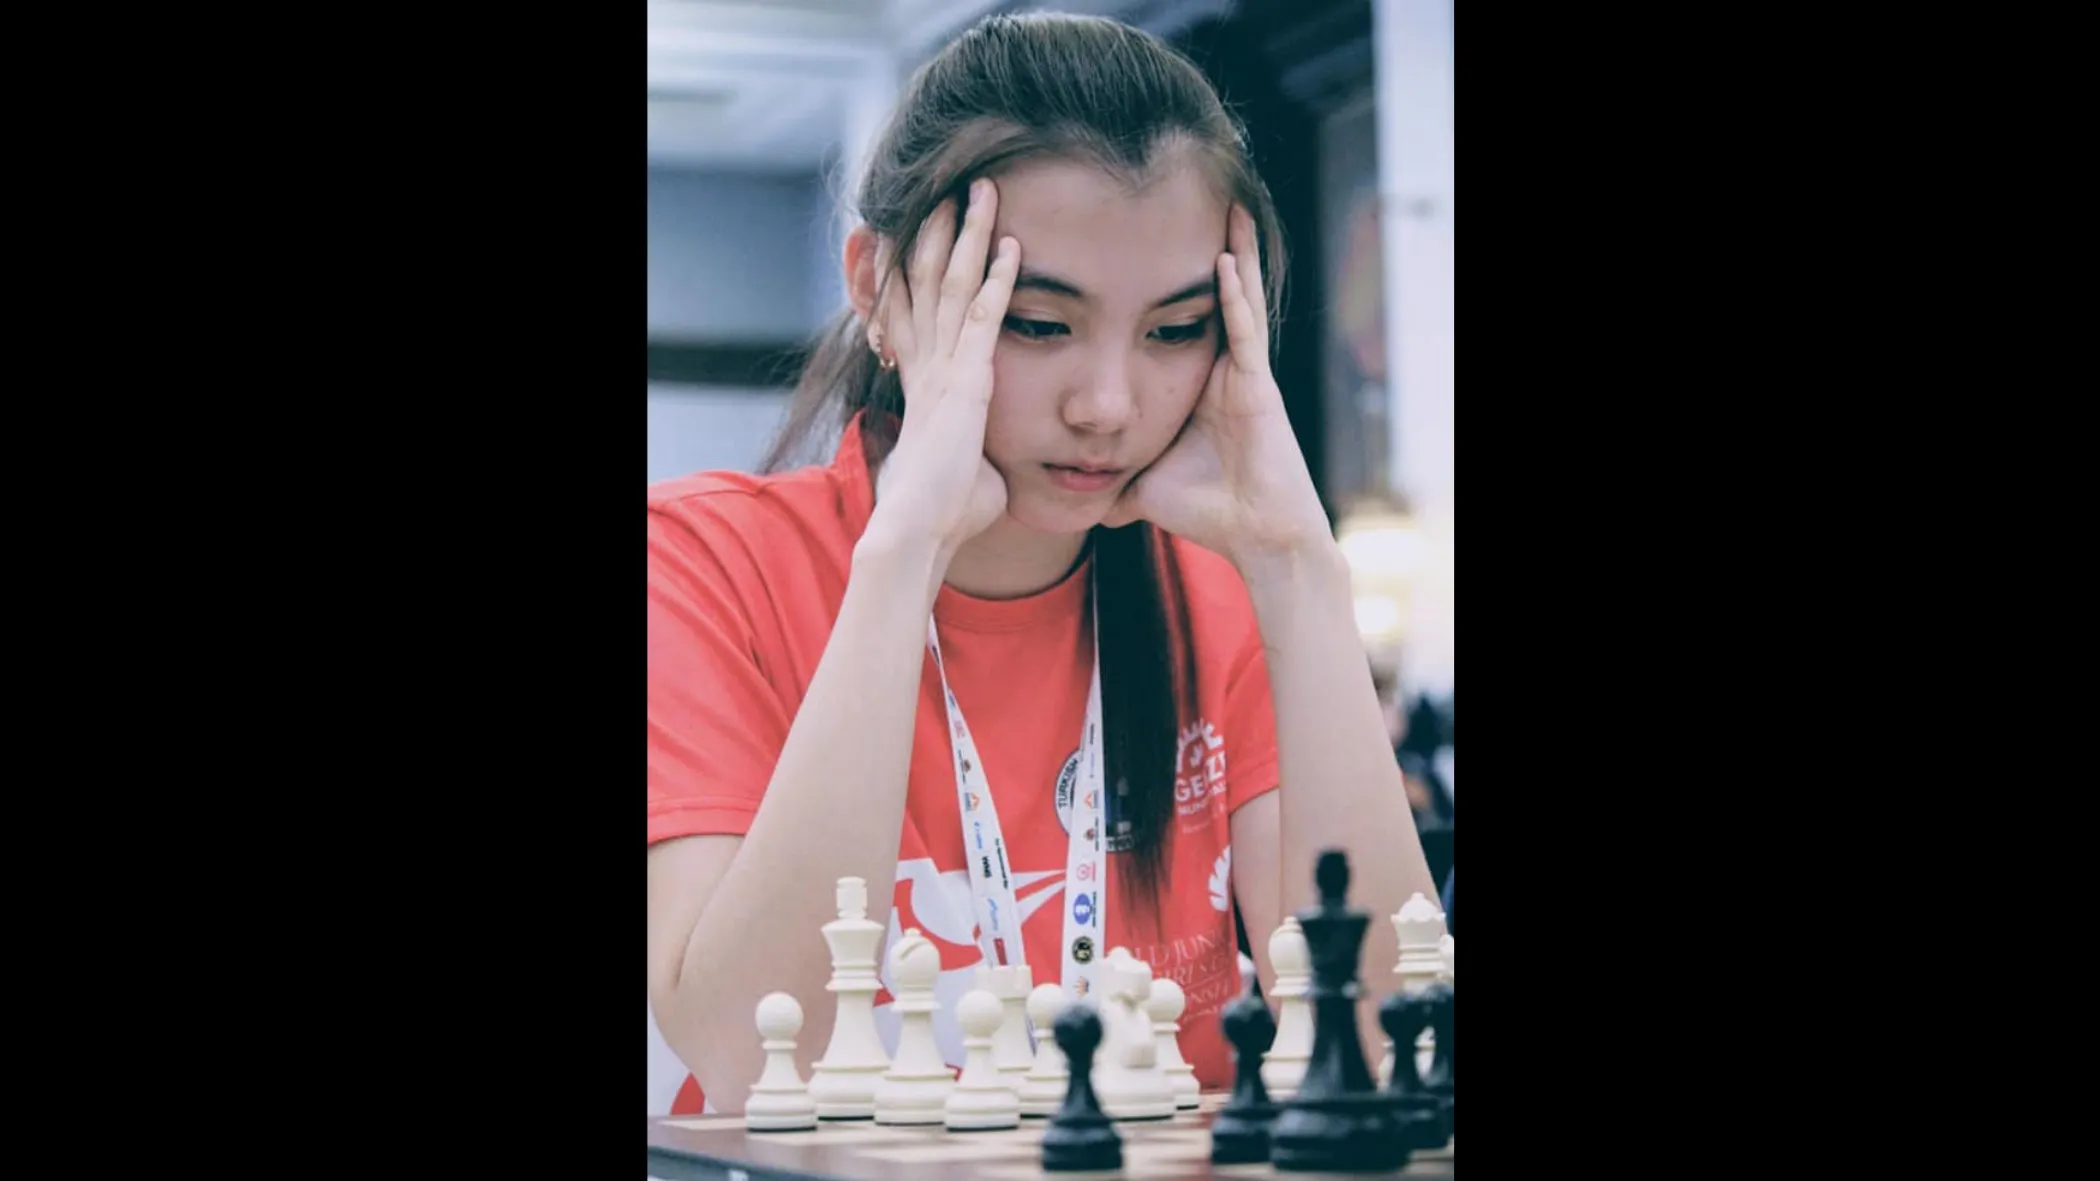 Kazakhstan's Chess Player Nogerbek Kazybek Wins World Cadet & Youth Rapid Chess  Championship 2022 in Greece - The Astana Times